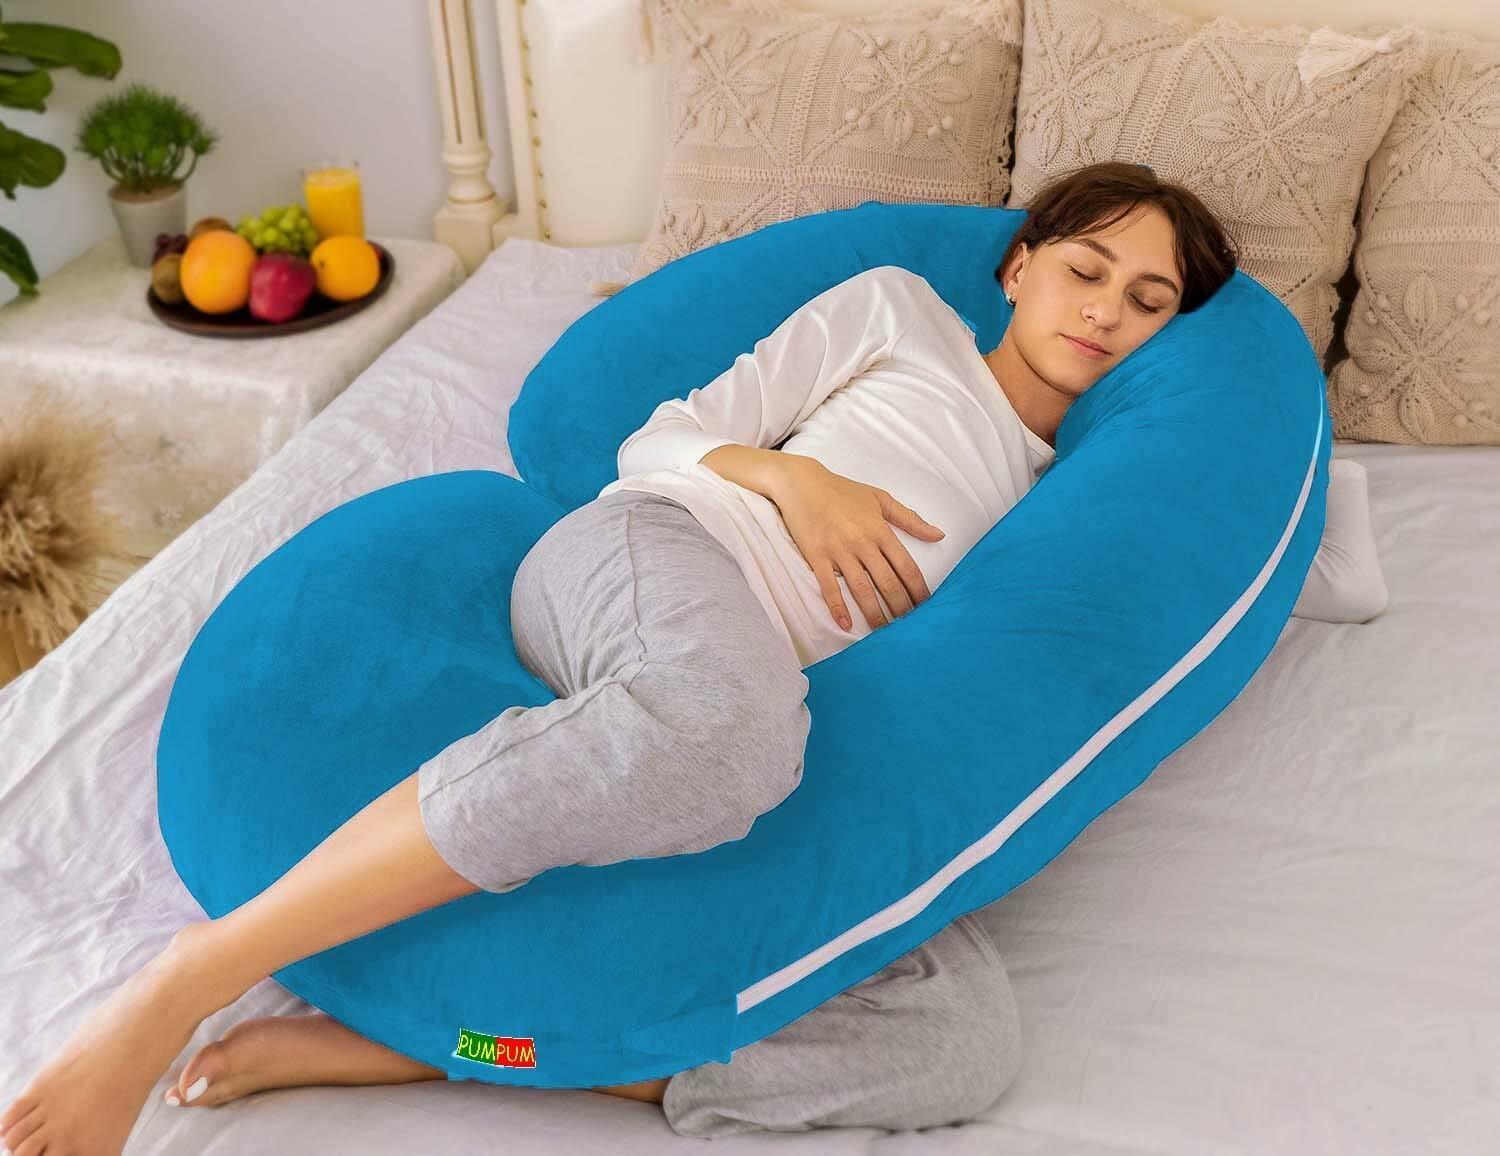 Body Pillow Hypoallergenic Fiber Filled Full Body or Pregnancy Maternity Pillow 